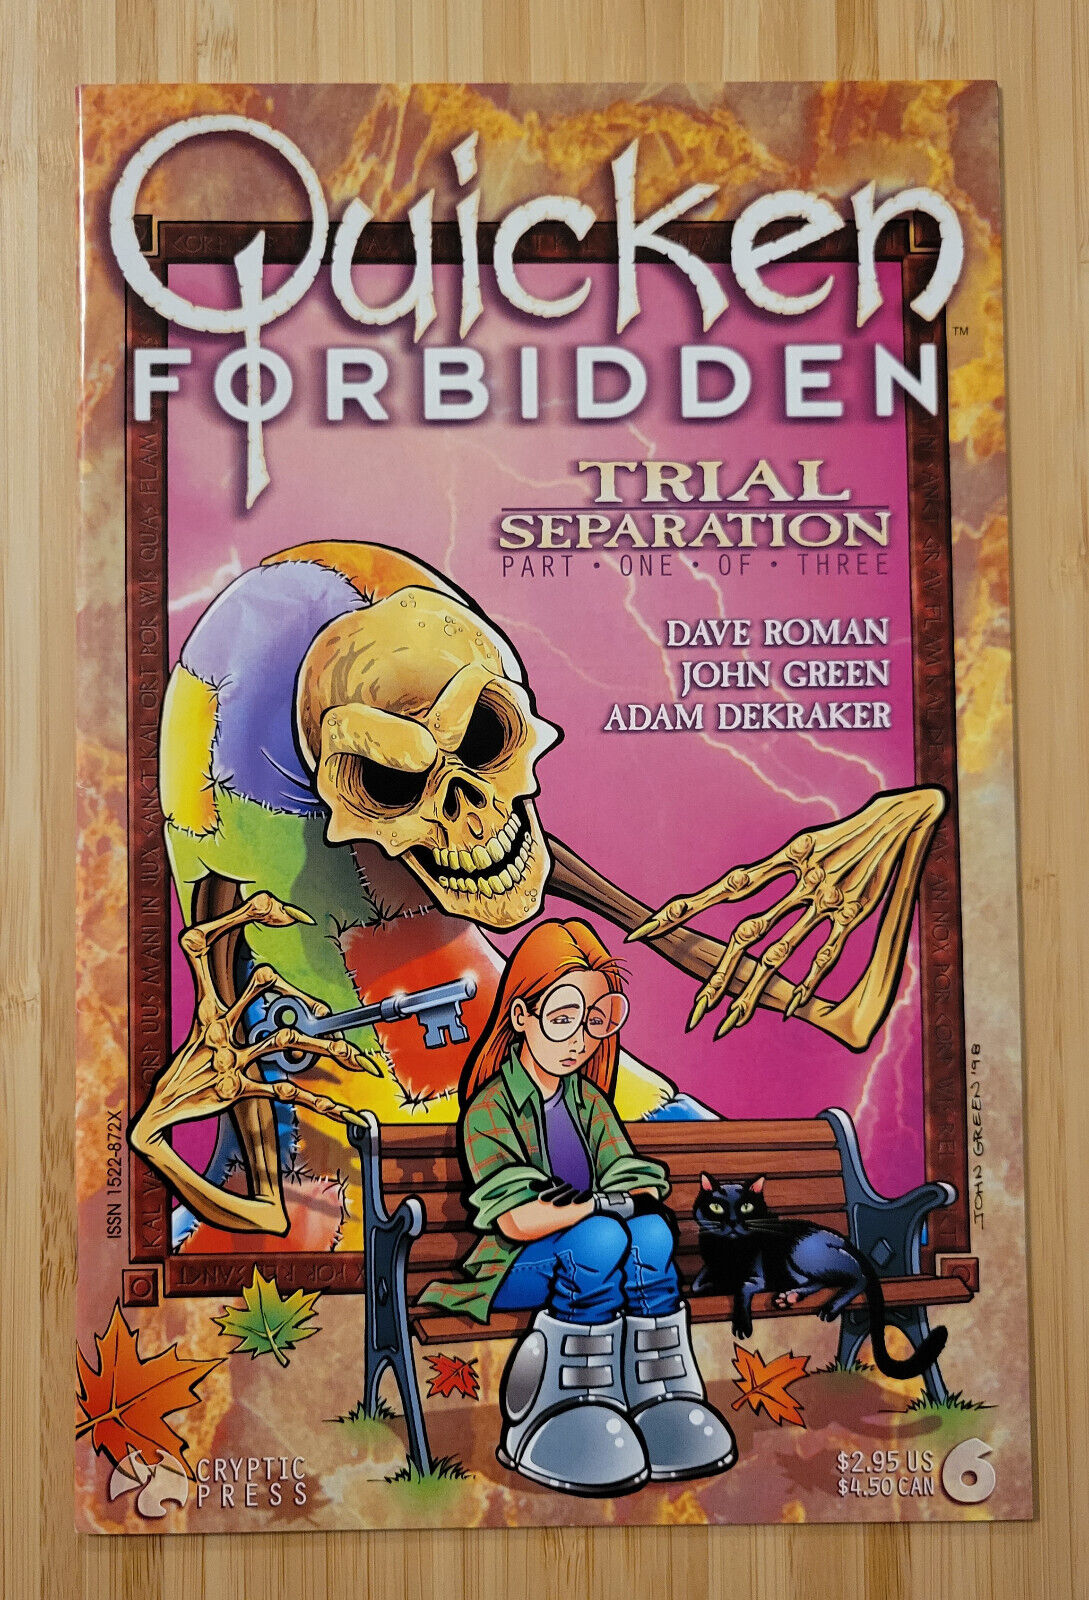 Quicken Forbidden #6 (1999, Cryptic) Dave Roman, John Green, Adam Dekraker